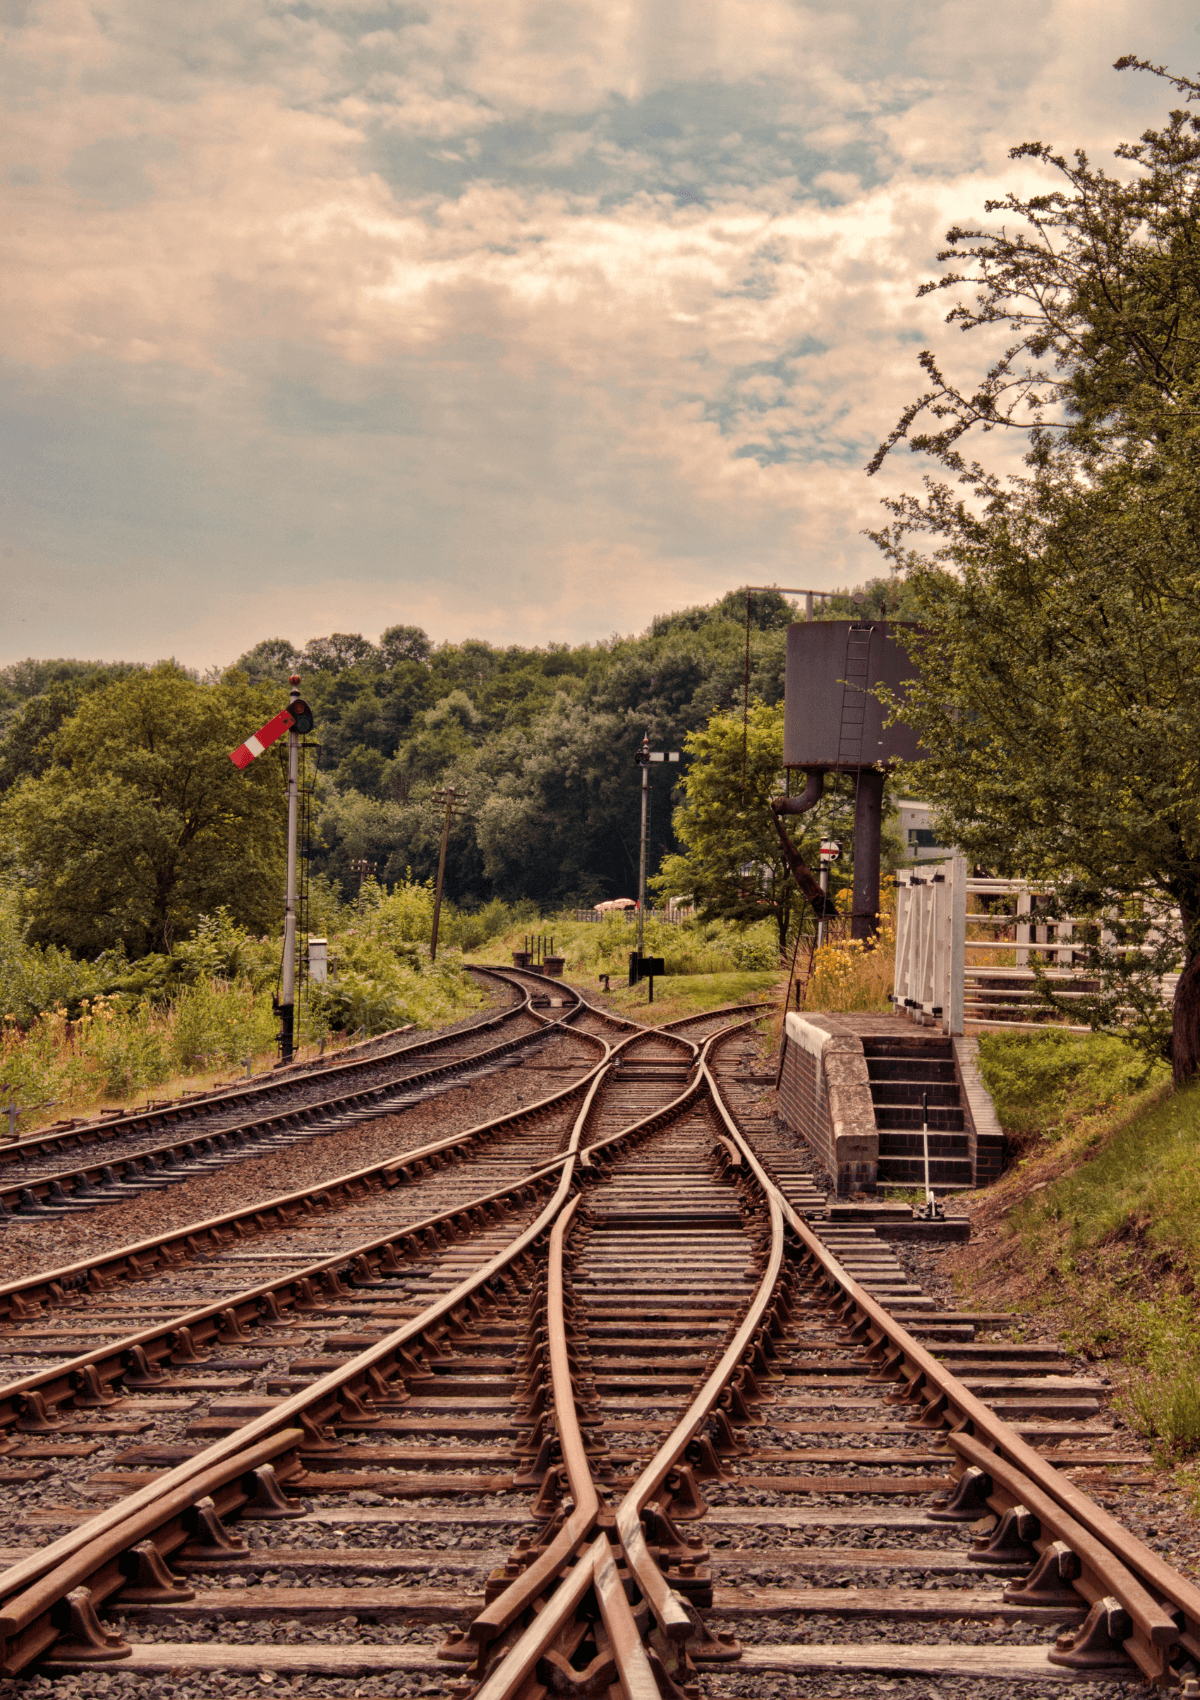 Severn Valley Railway, England 